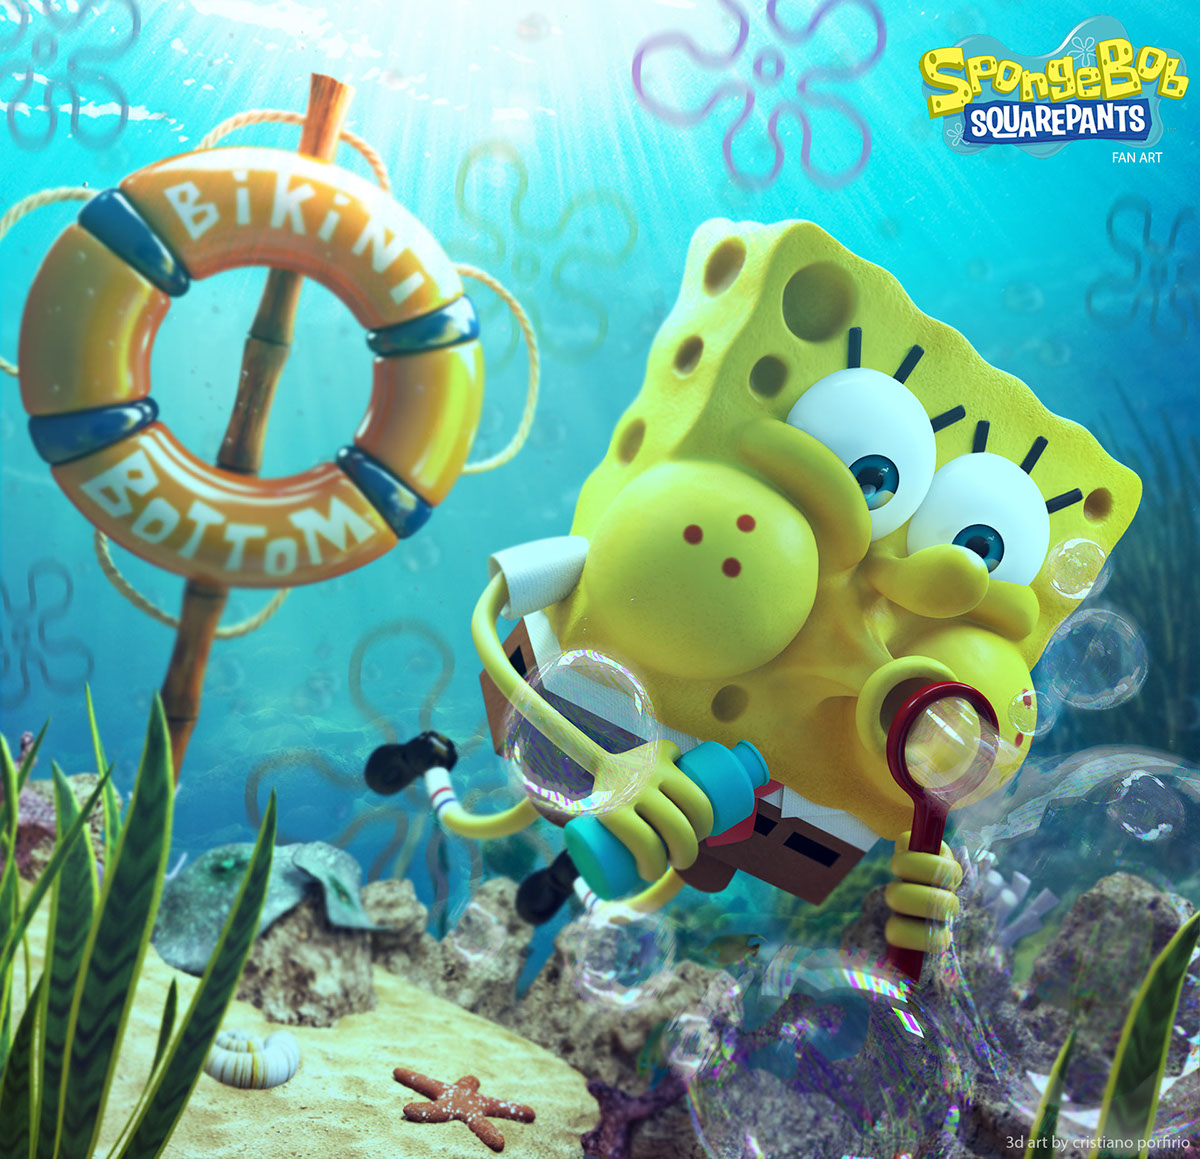 Bob Sponge square pants underwater bubble 3ds max Zbrush vray 3D Brazil